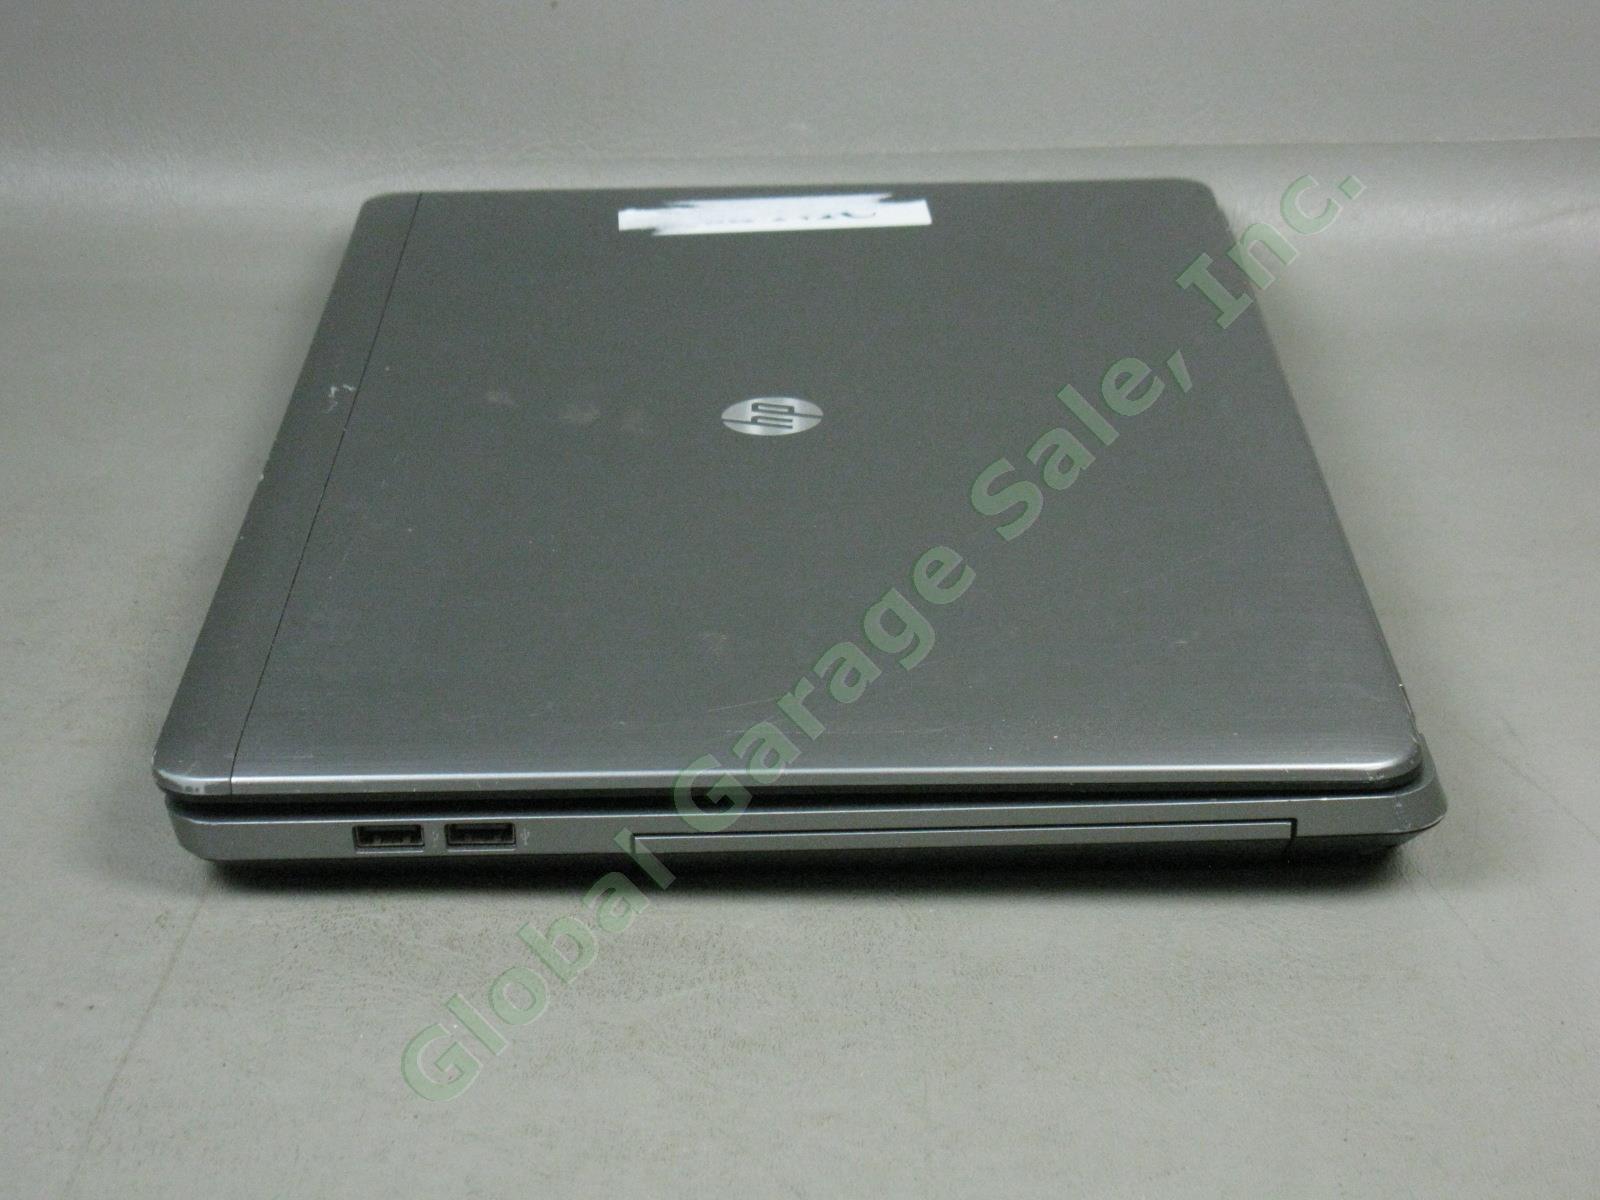 HP ProBook 4540s Laptop Computer Intel i5 2.60GHz 300GB HDD 4GB RAM Win 10 Pro 6